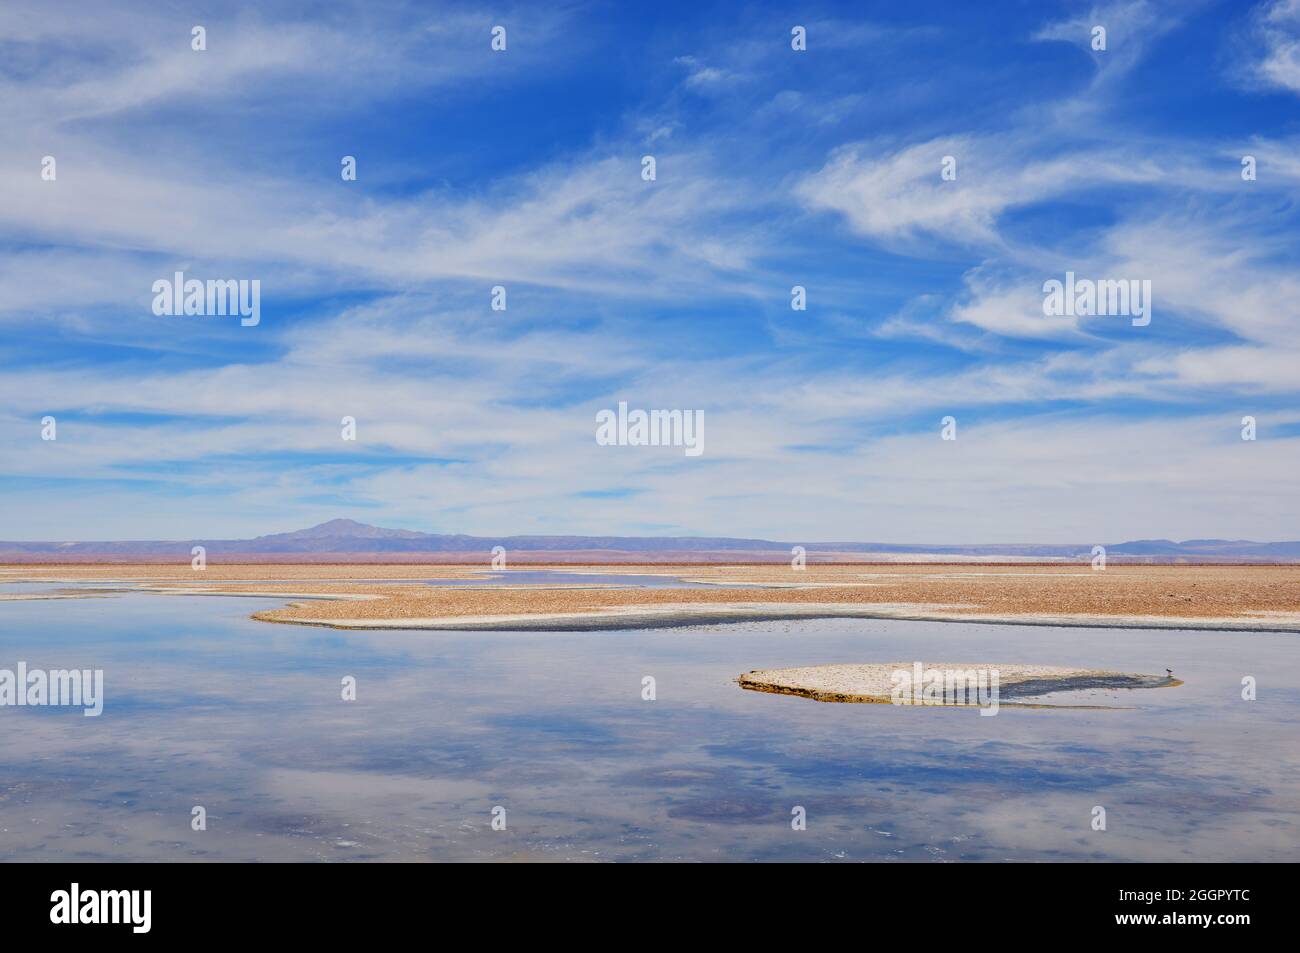 The Atacama desert salt flat (Salar de Atacama) landscape reflection, Chile. Stock Photo